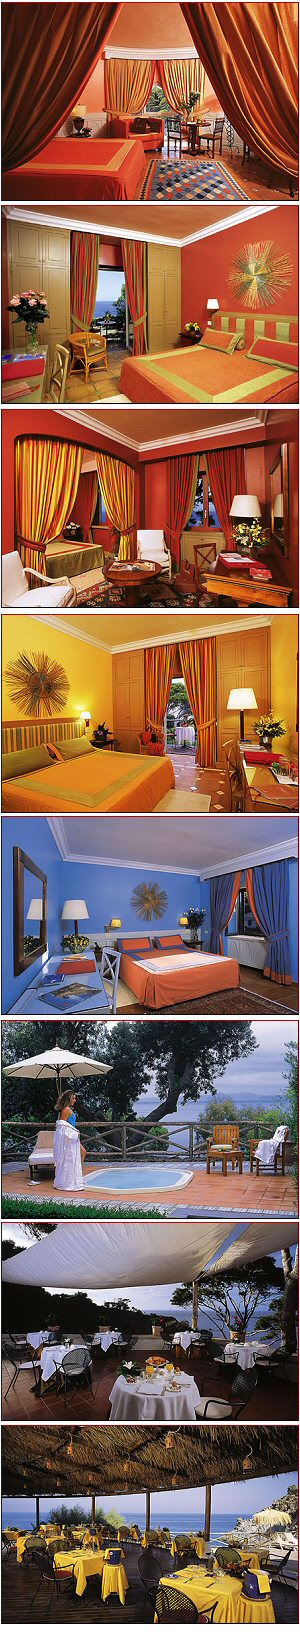 Mezzatorre Resort & Spa Hotel Ischia - Forio d'Ischia